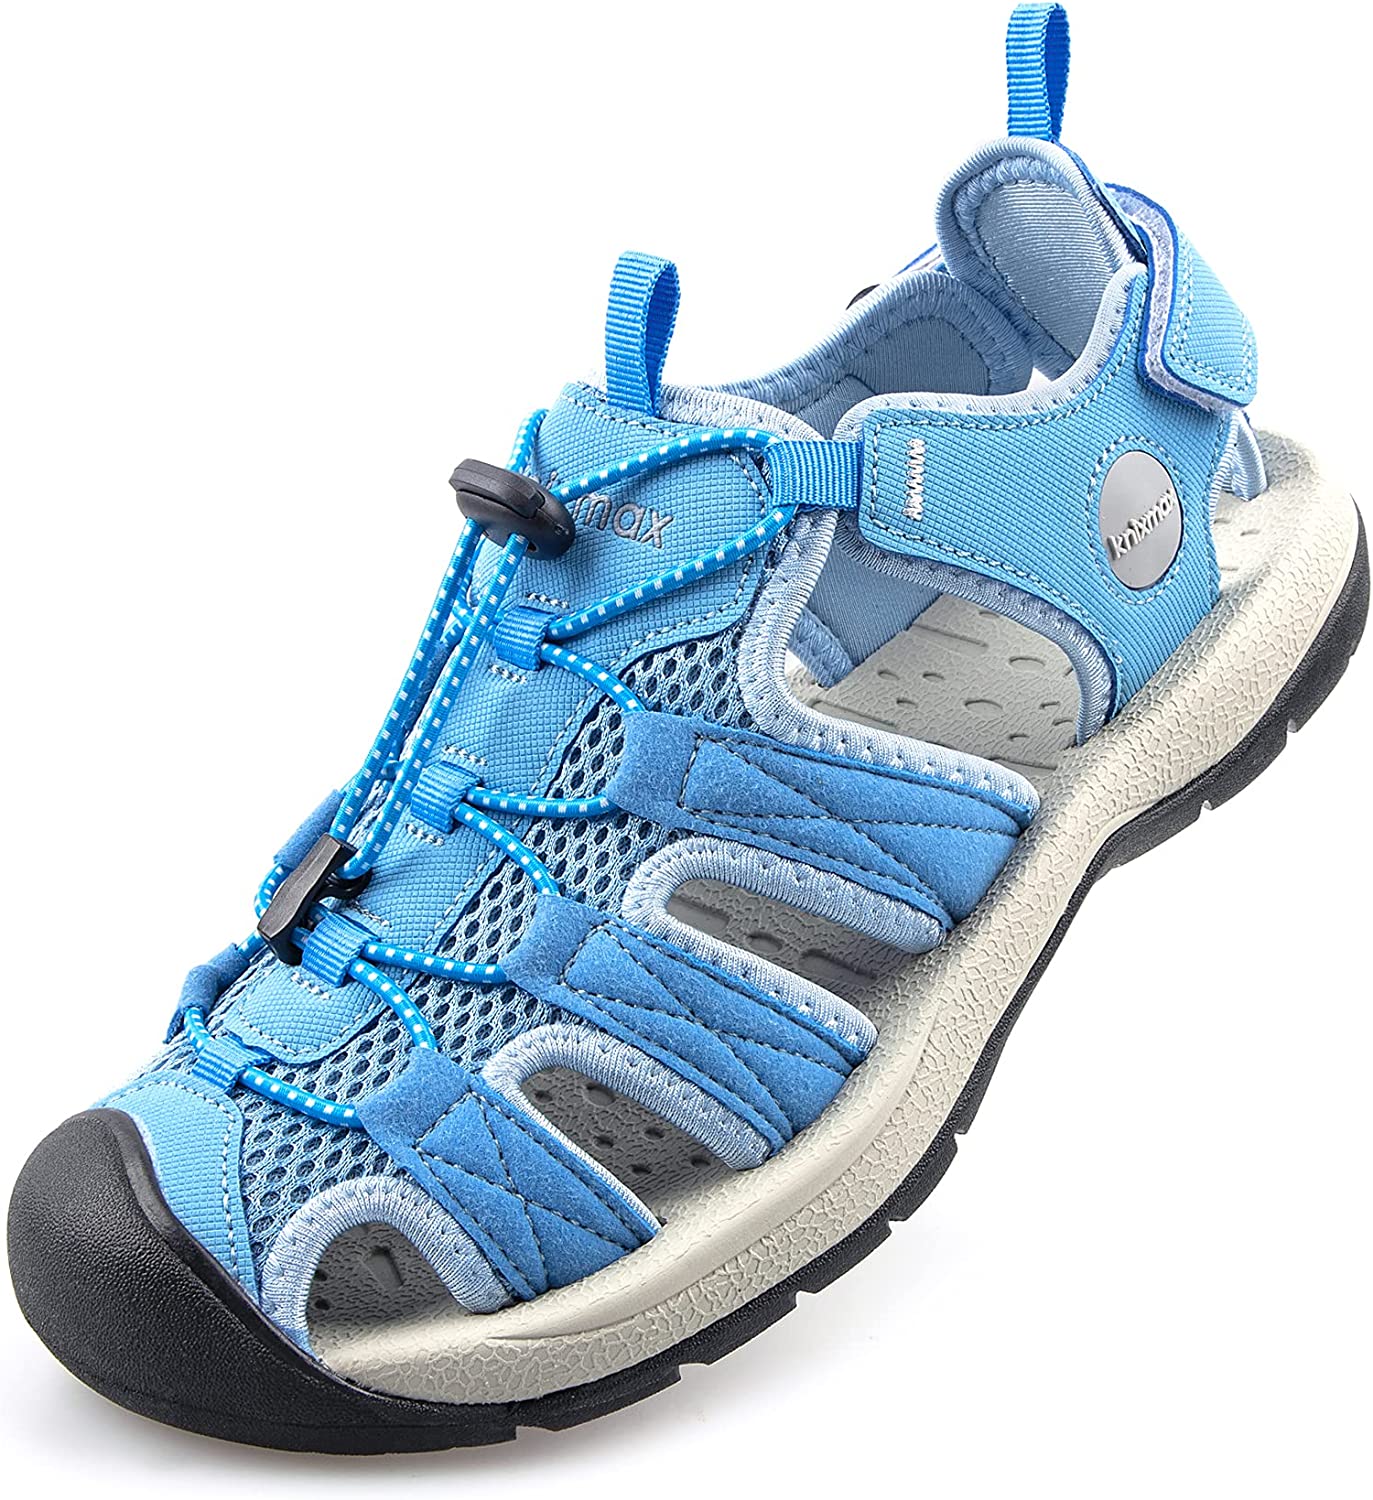 Blue Closed Toe Sandals - Sandal Design